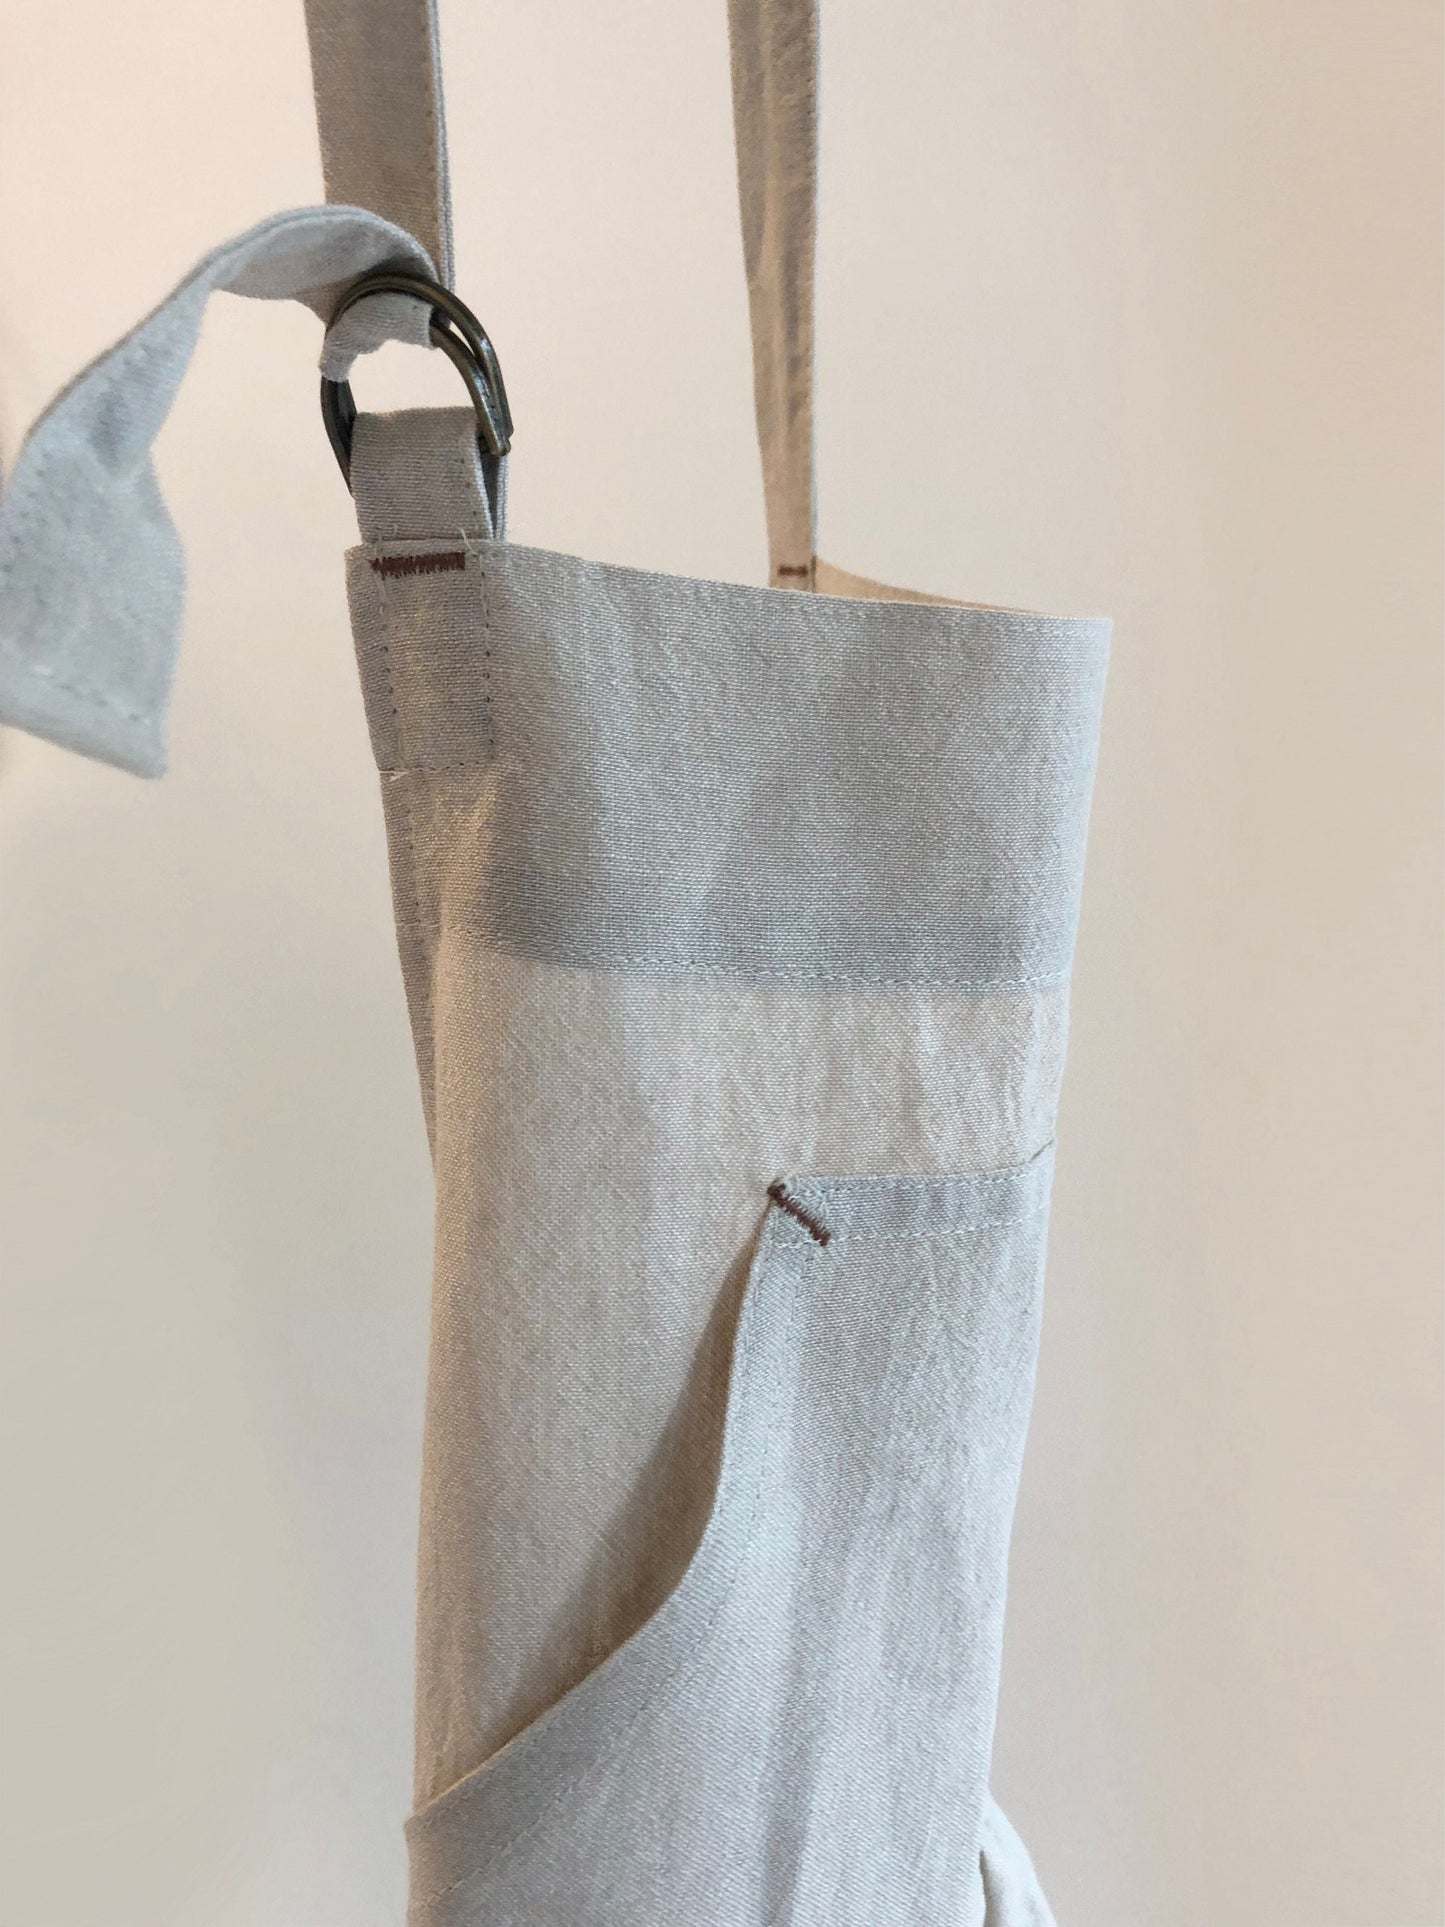 Linen cotton sherring apron